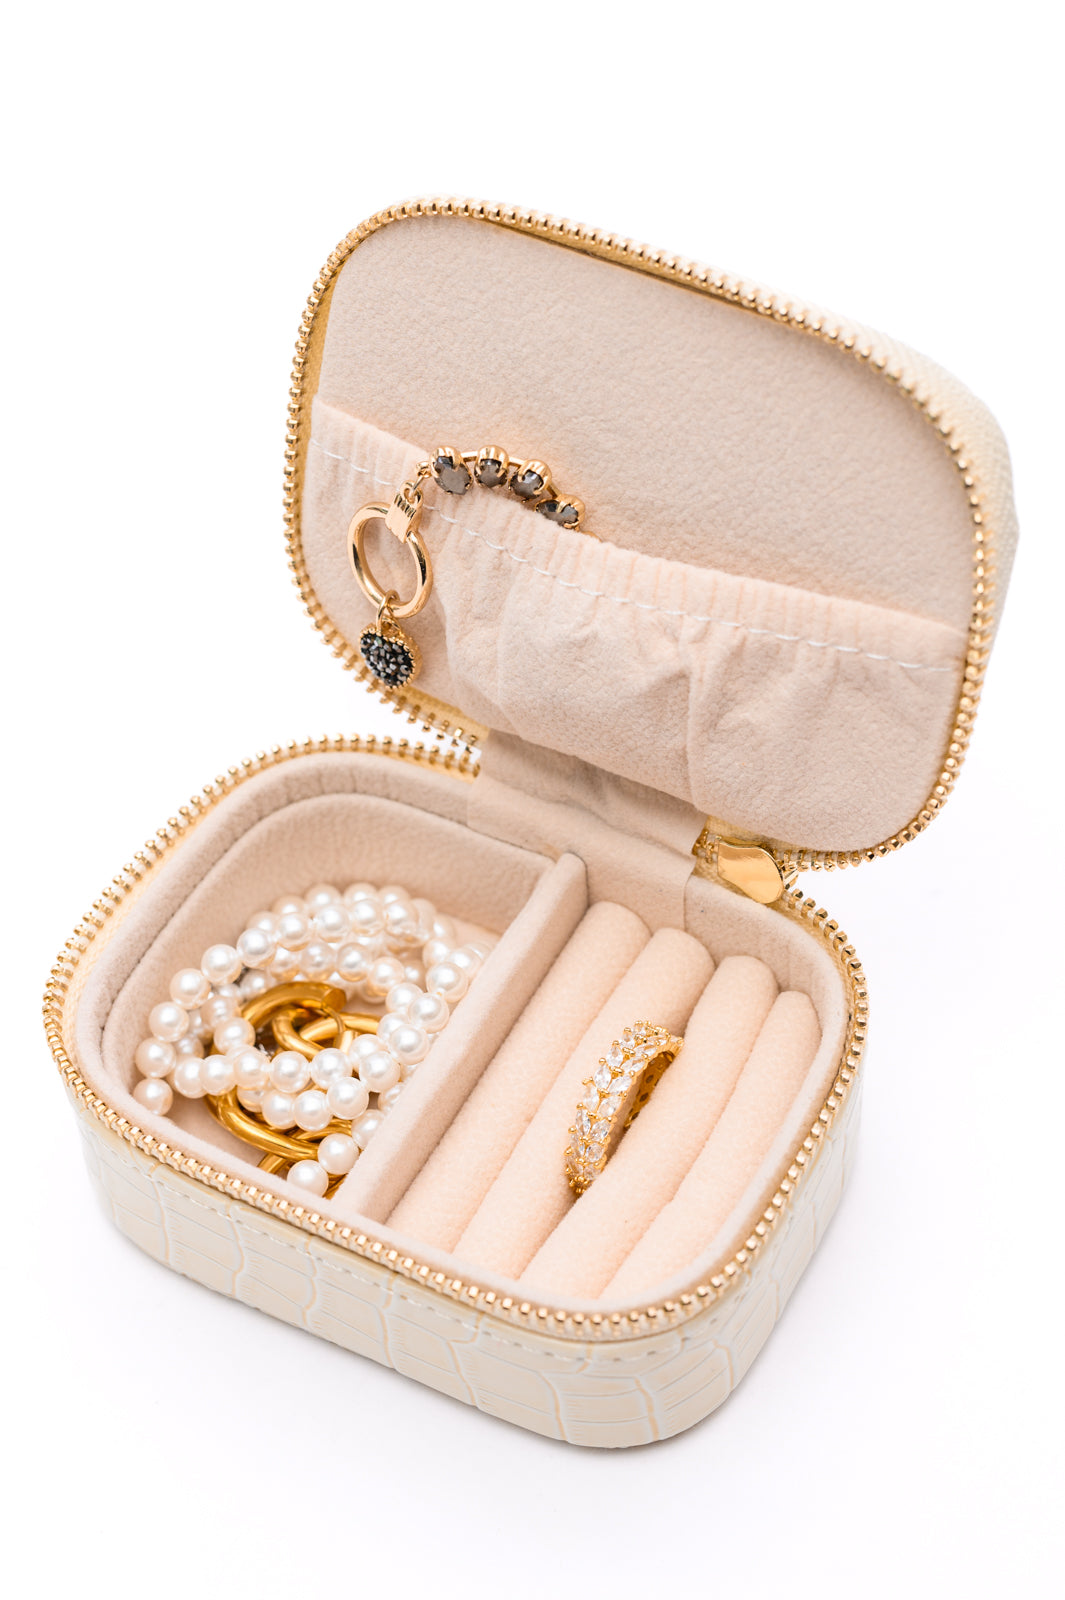 Hidden Gems Jewelry Case in Cream Snakeskin